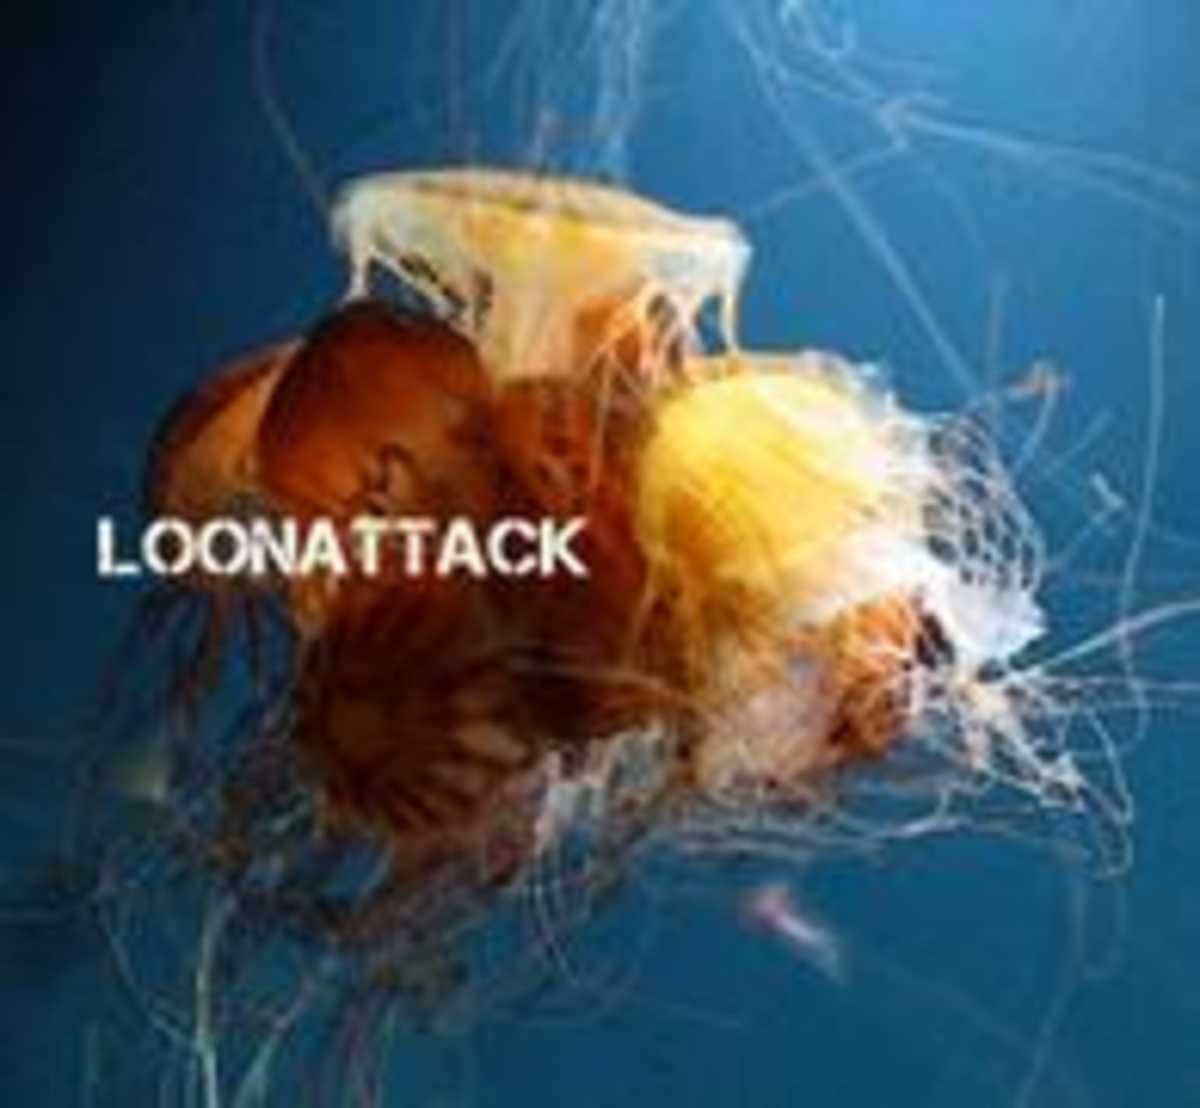 Loonattack